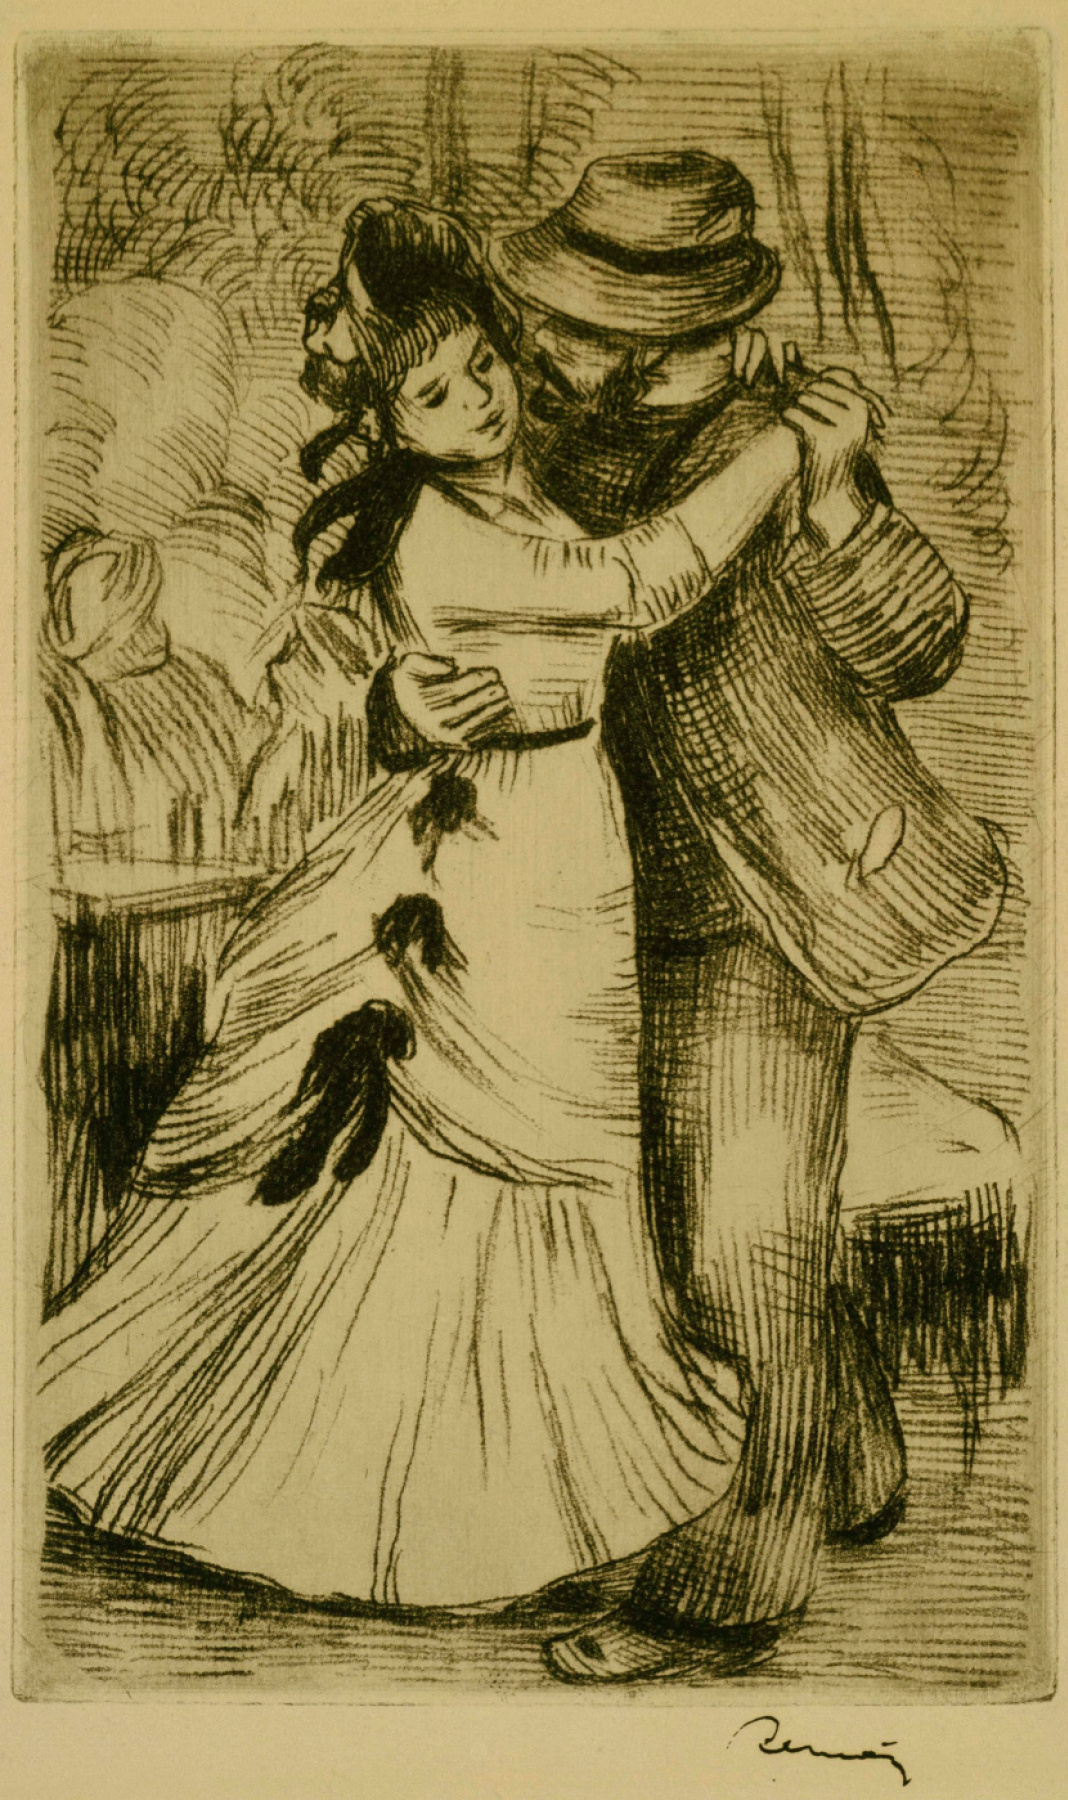 Pierre-Auguste Renoir. The dance in the village